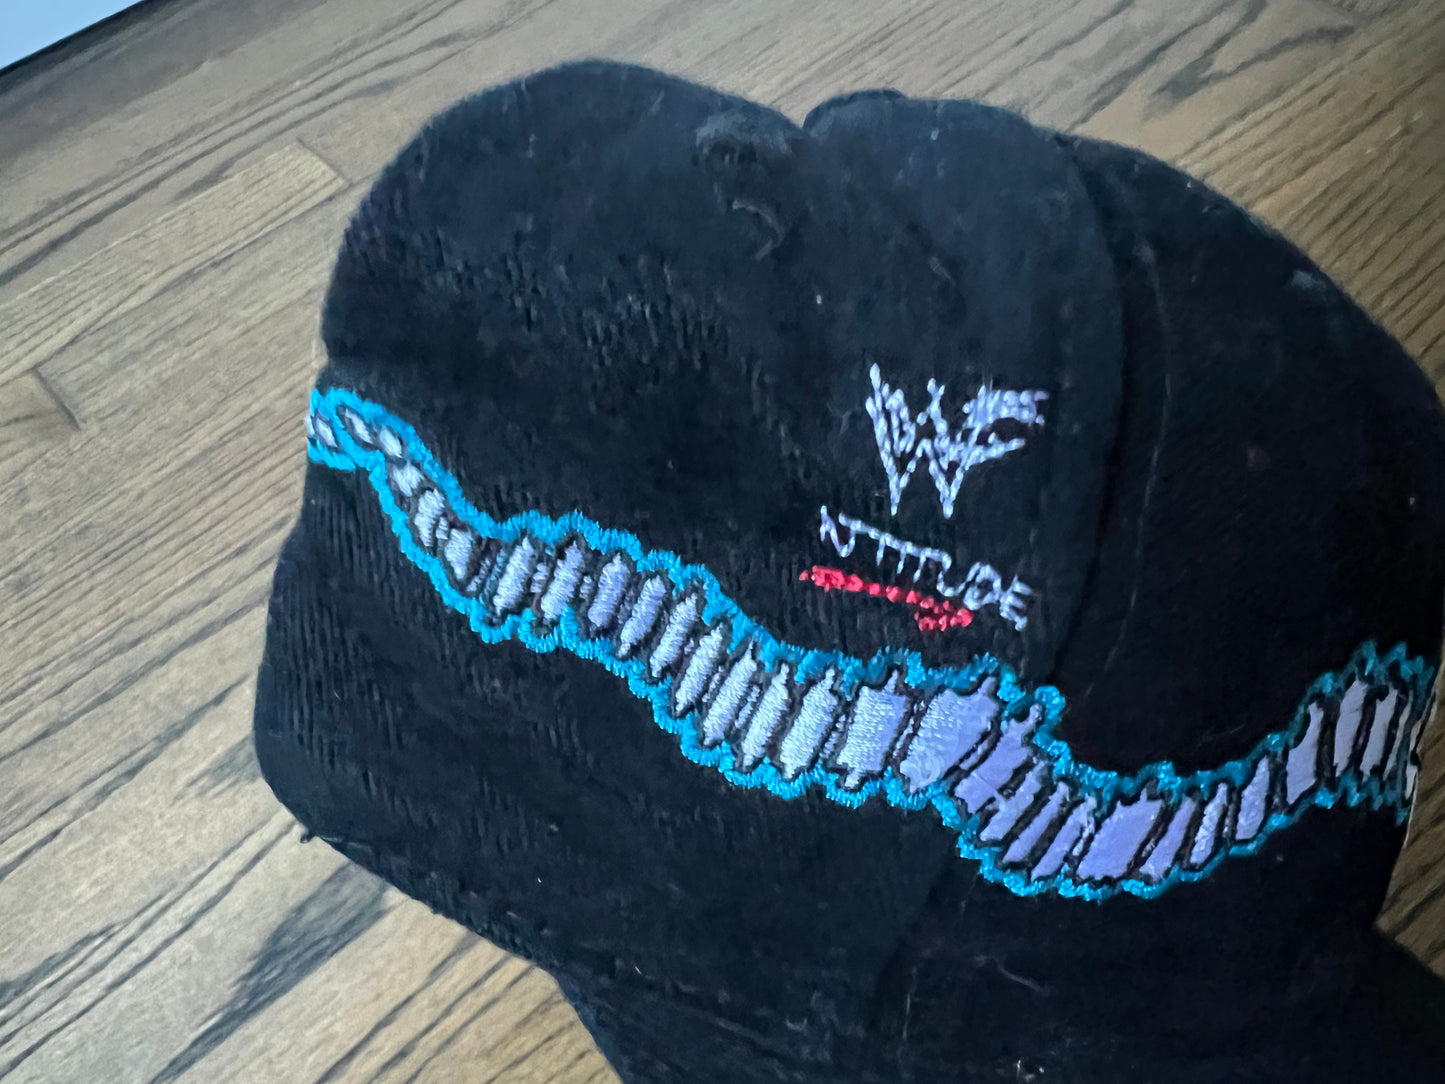 1998 WWF “Stone Cold” Steve Austin “Bad to The Bonz” SnapBack hat